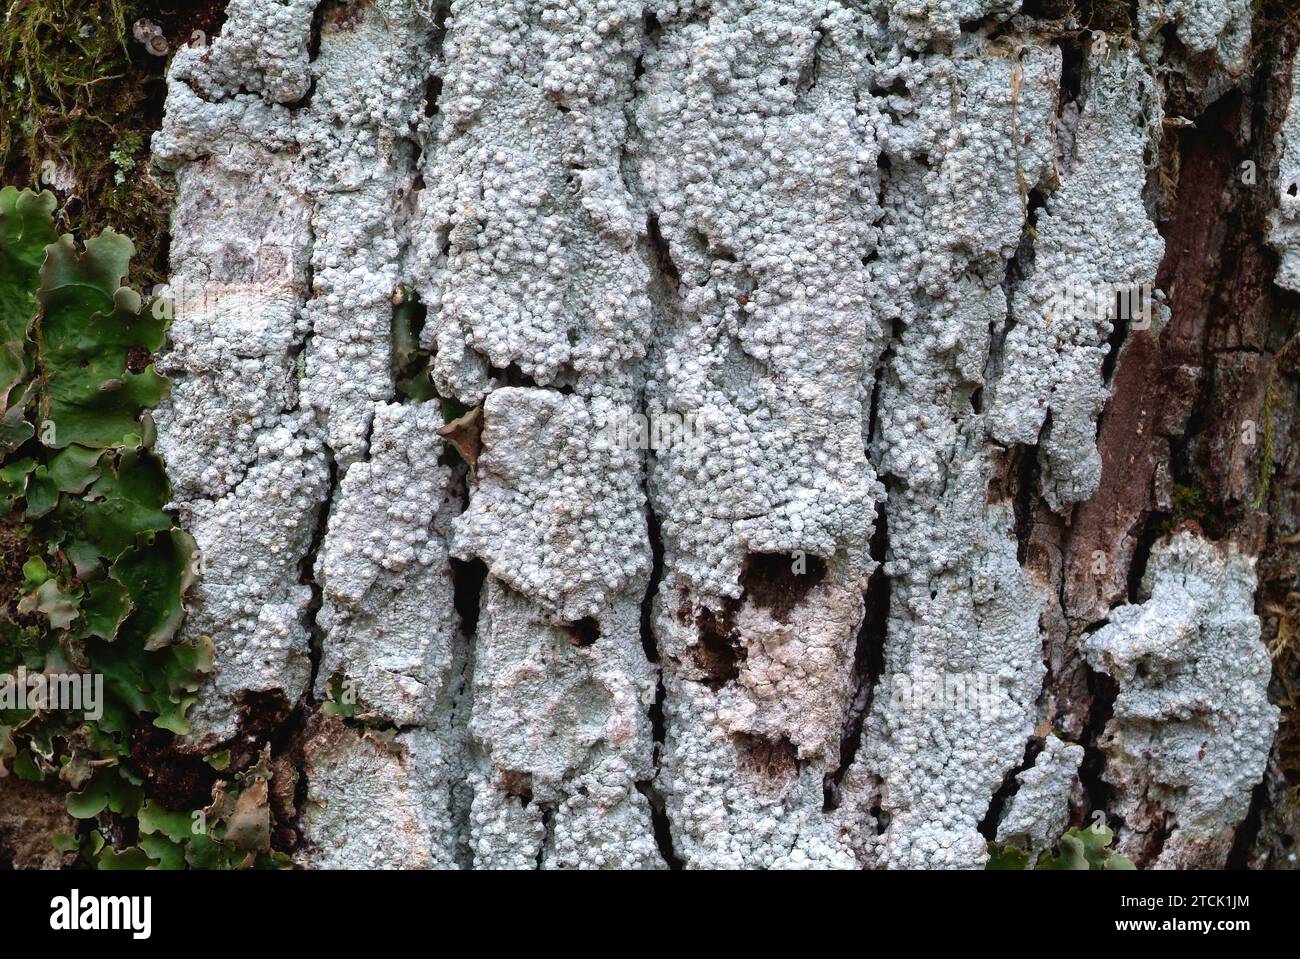 Pertusaria amara or Lepra amara is a crustose lichen that grows on tree barks or siliceous rocks. Stock Photo